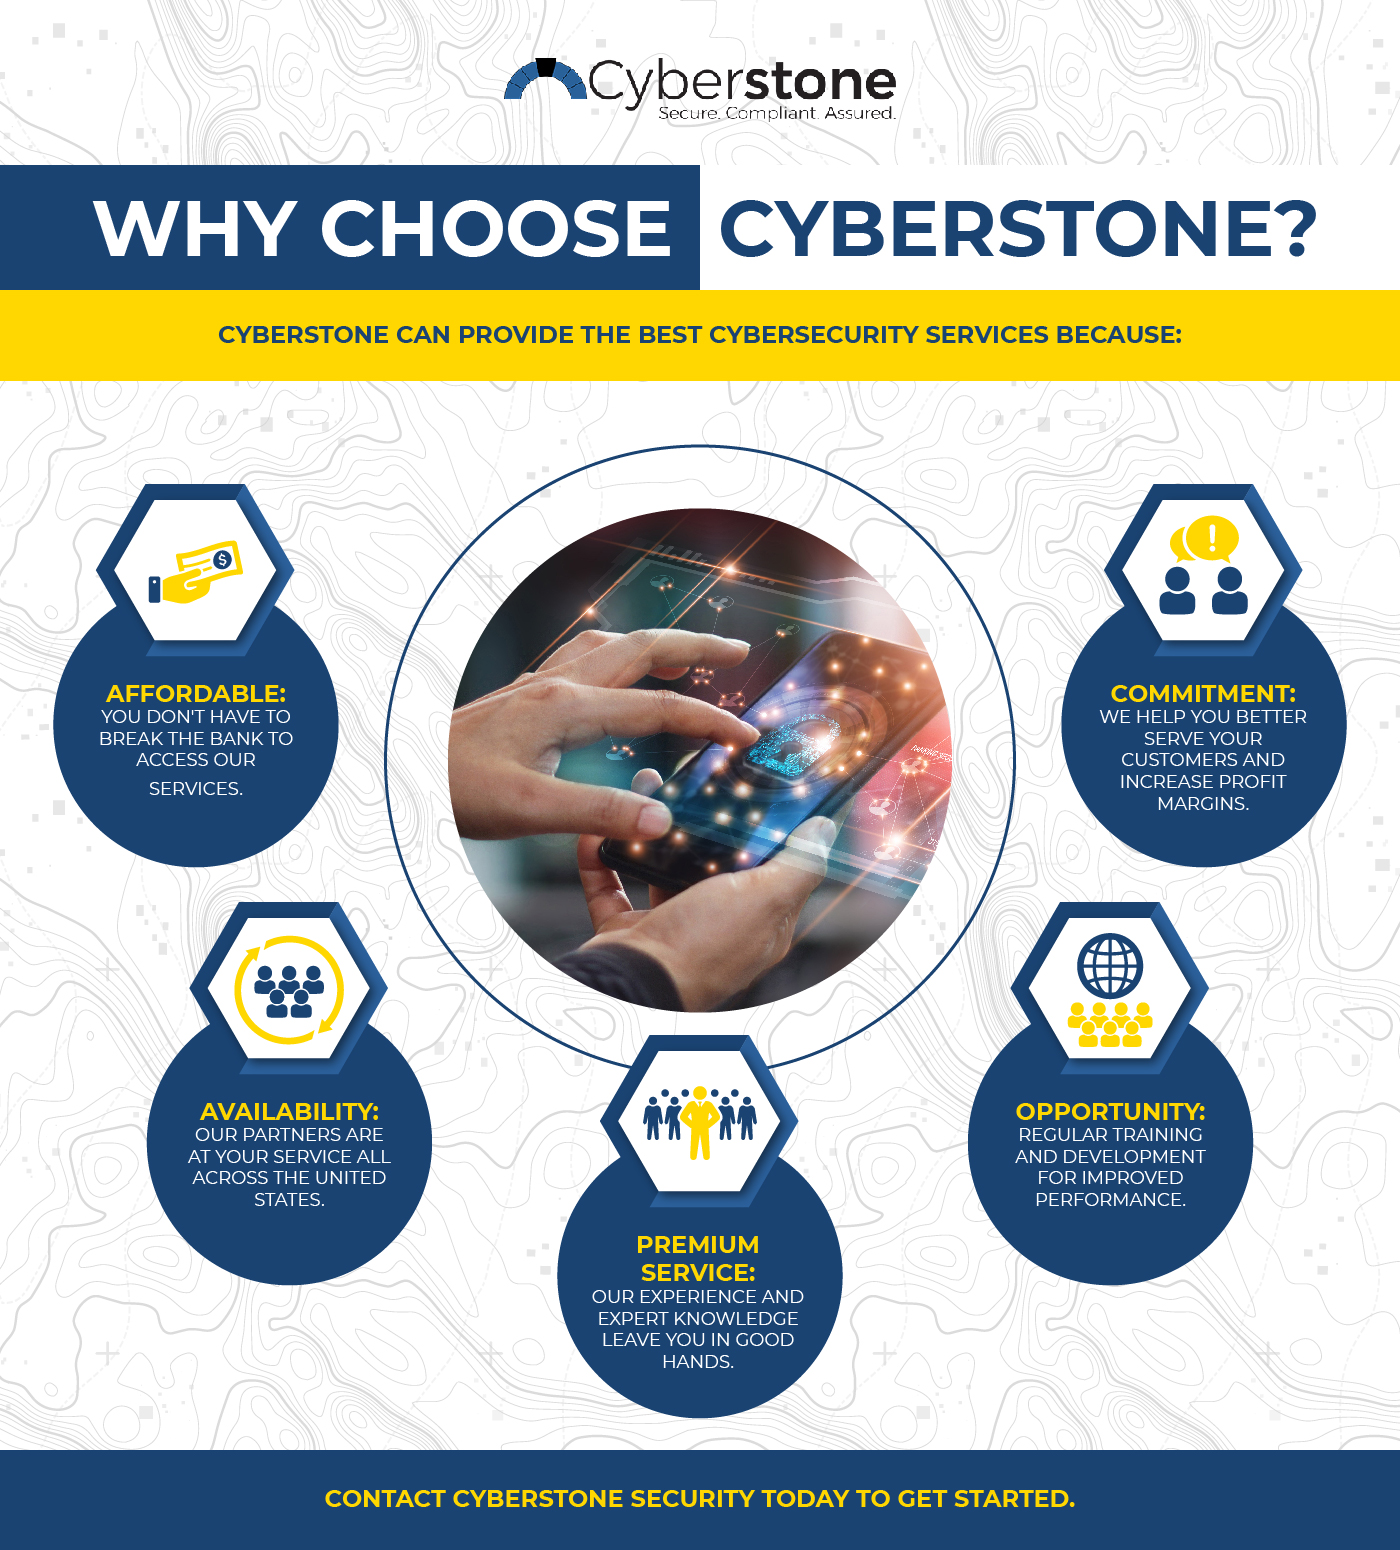 CyberstoneSecurity-M25427-Infographic-WhyChooseCyberstone-2021-09-27-01-61523793e3ee6